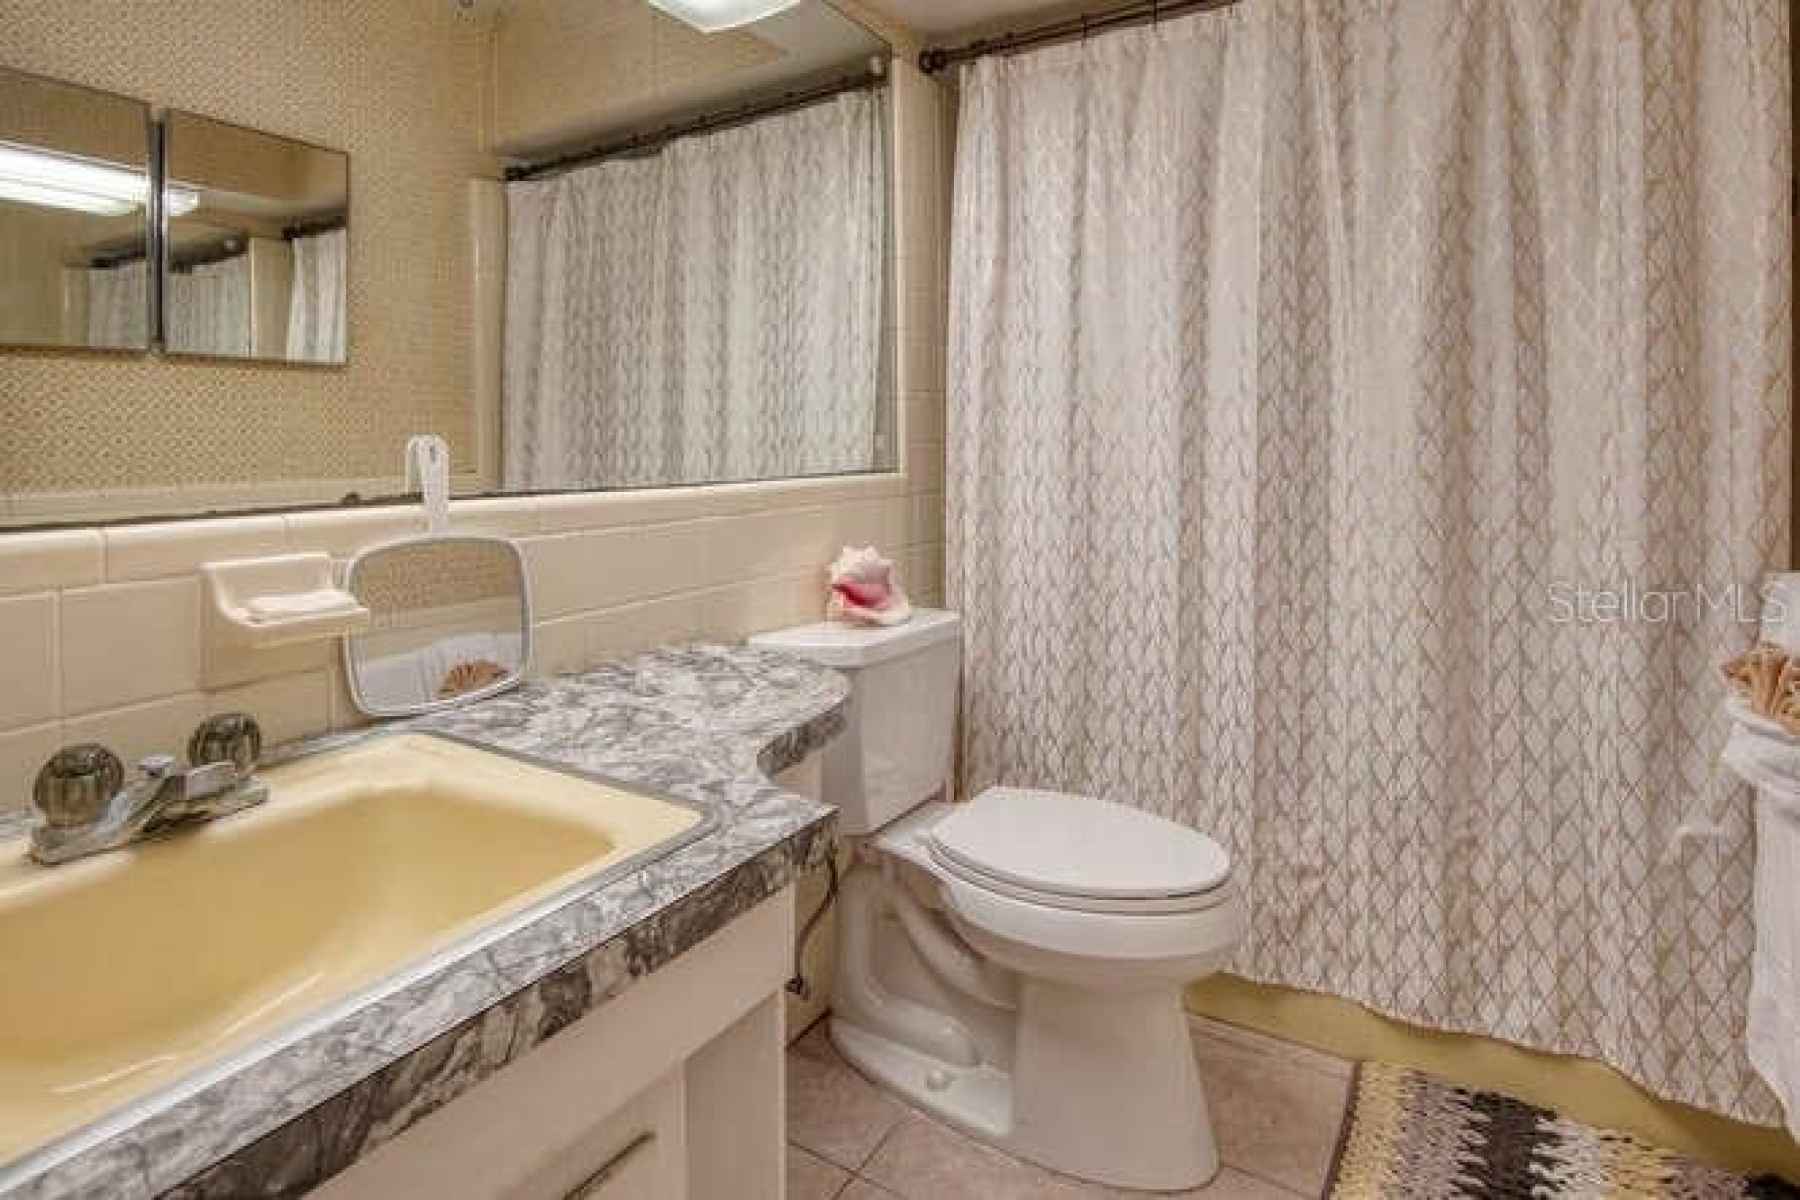 HALL bathroom tub/shower combo